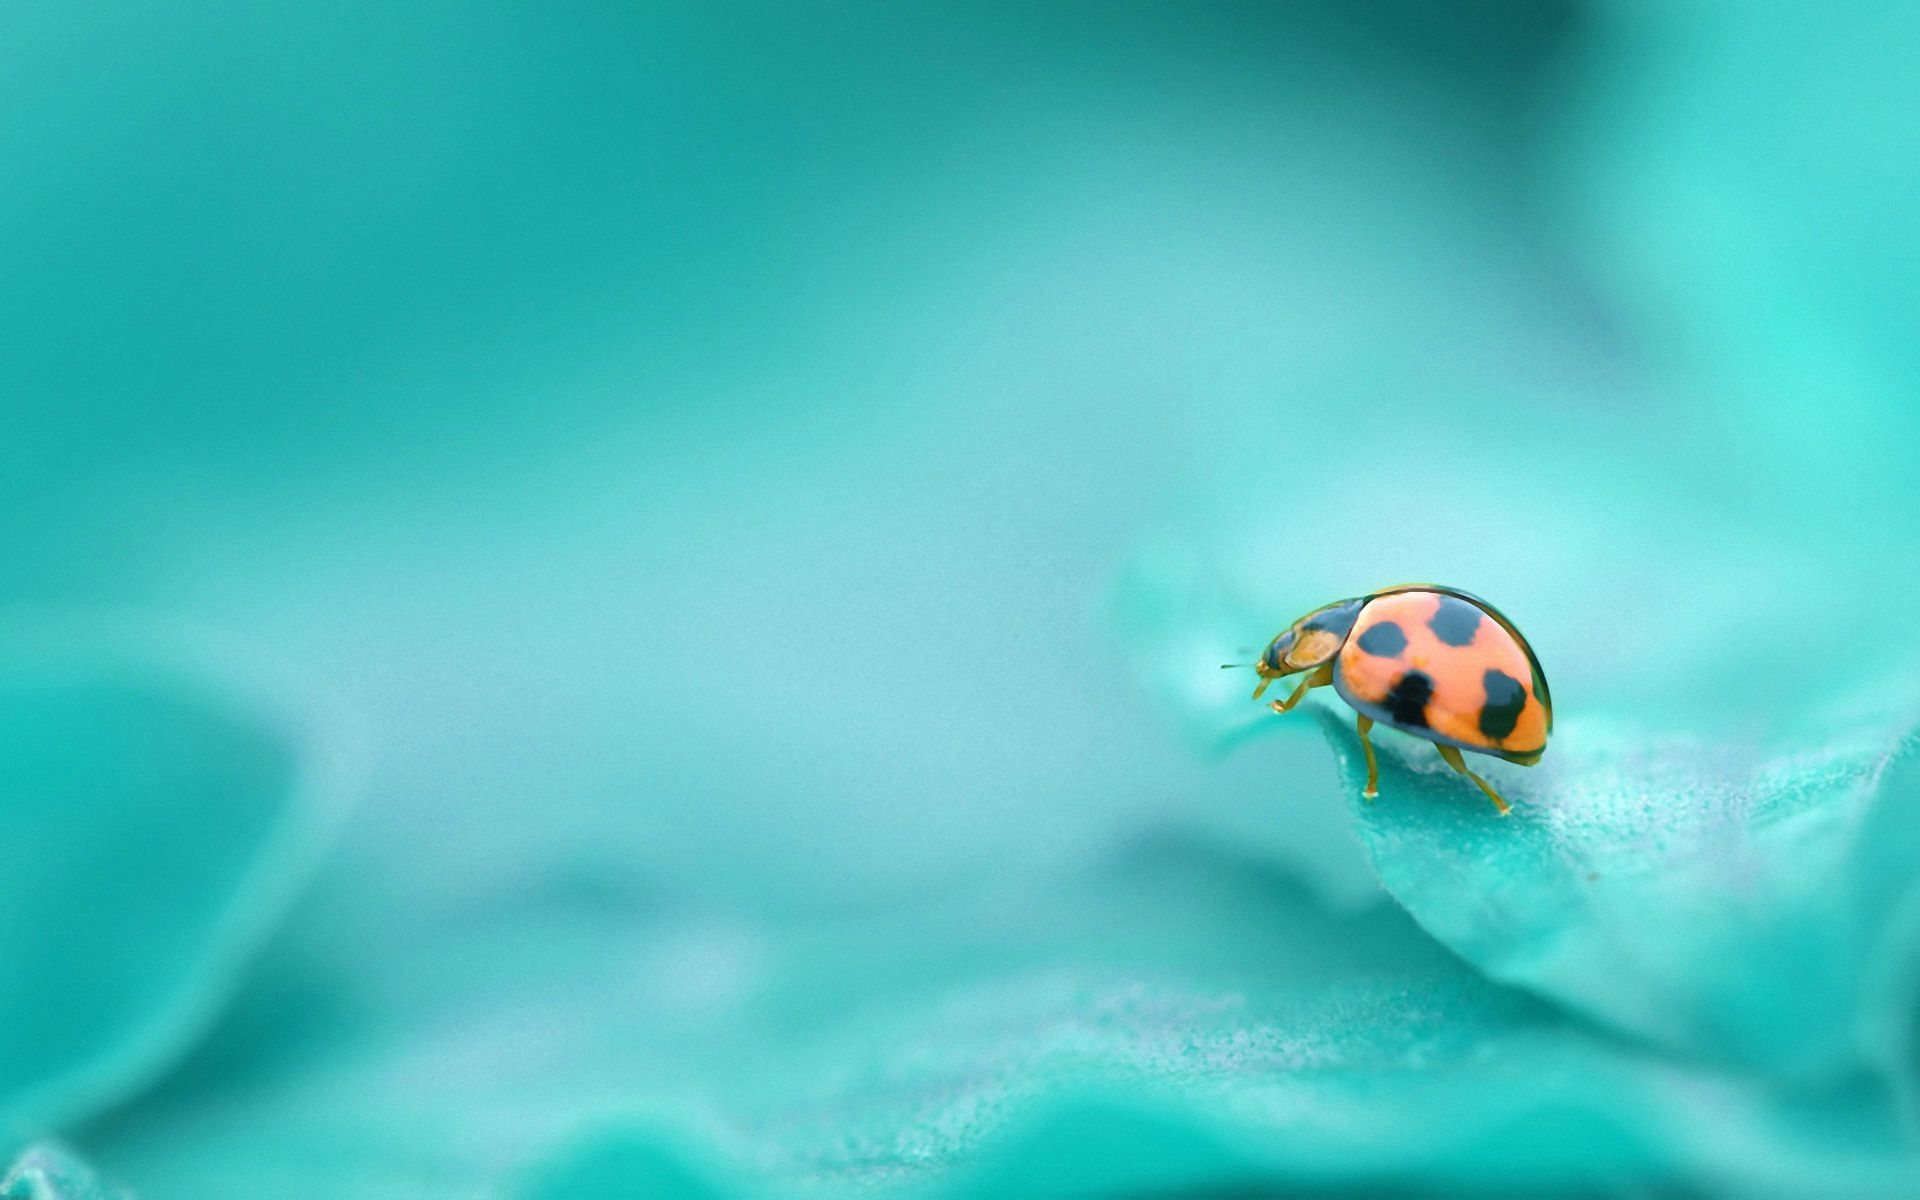 Download Cute Ladybug Wallpaper 3942 1920x1200 px High Resolution